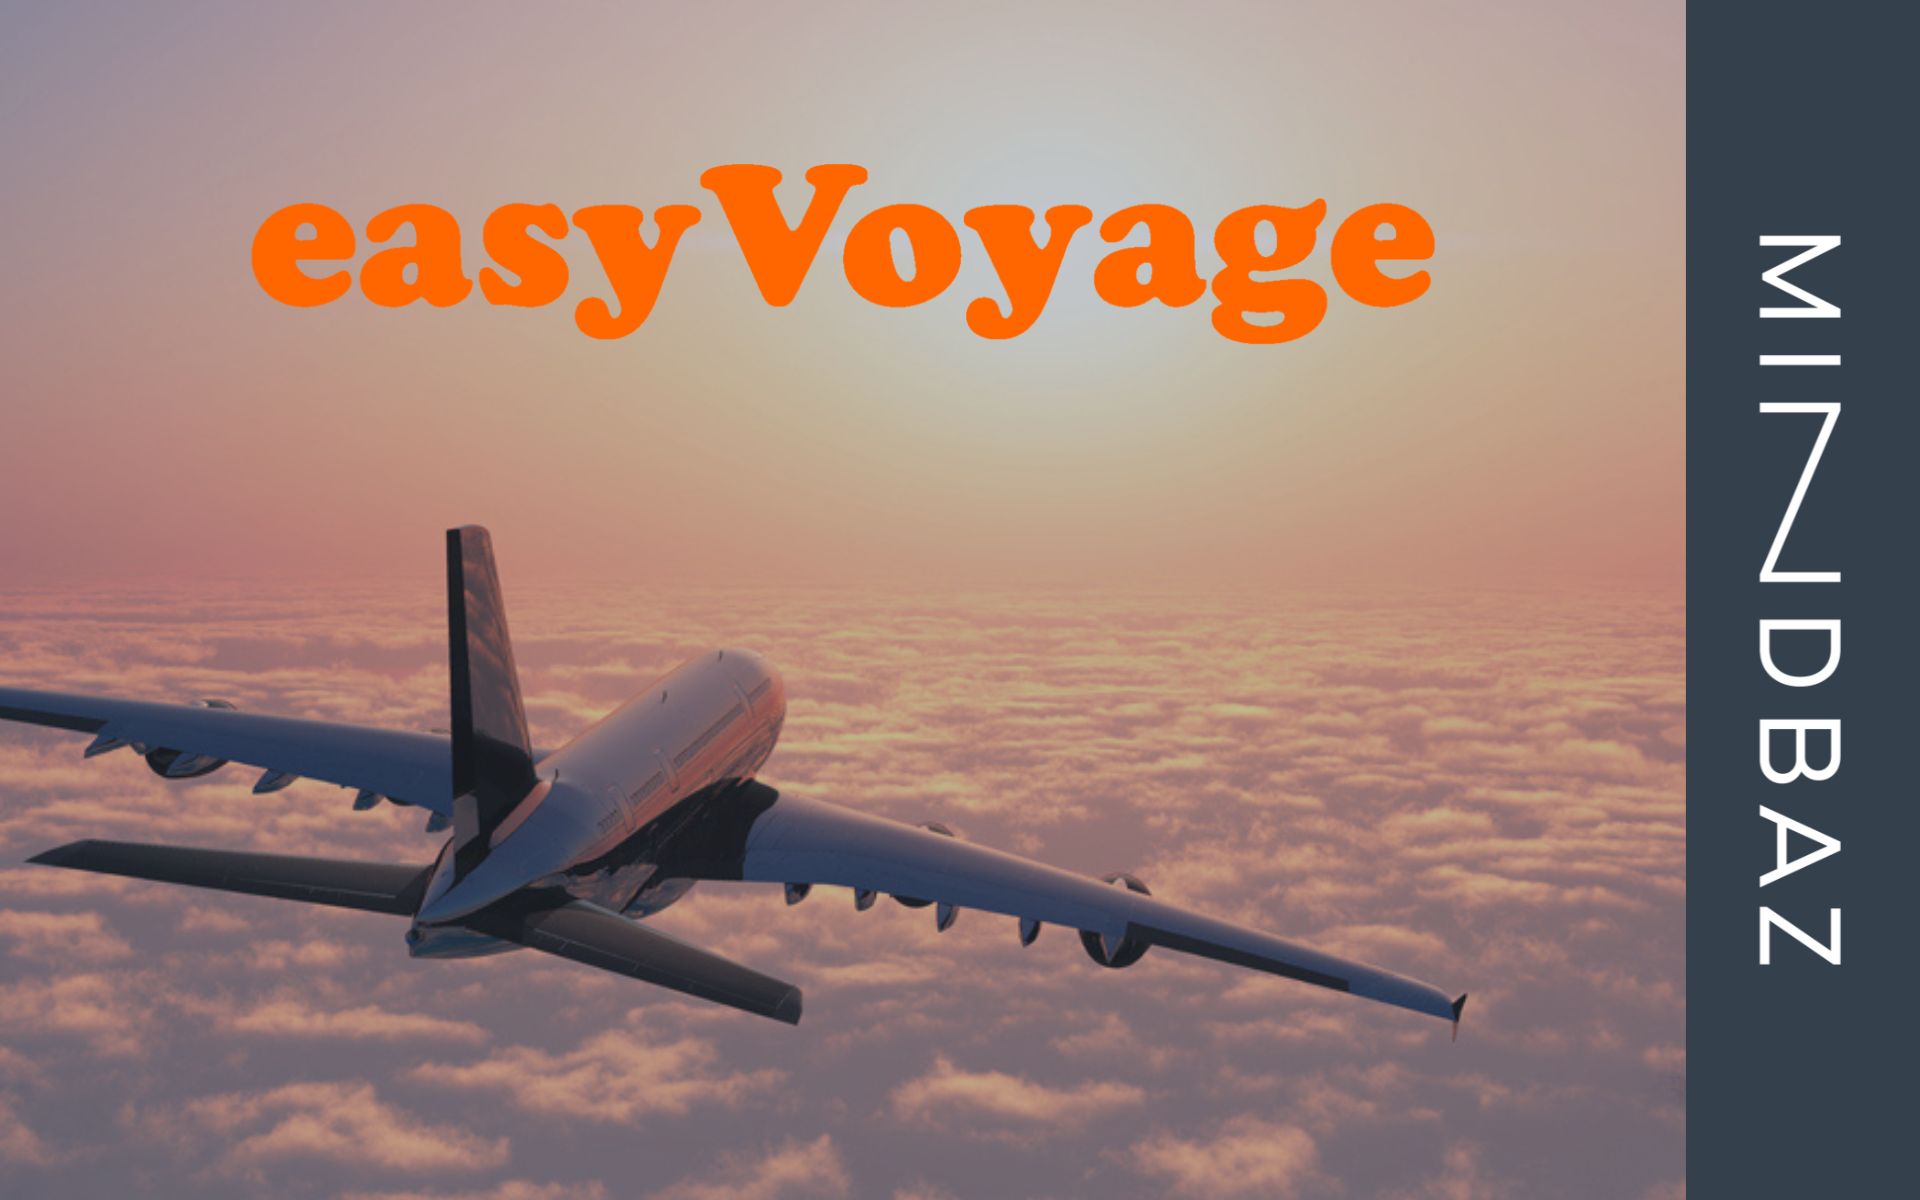 témoignage client easy voyage avis mindbaz